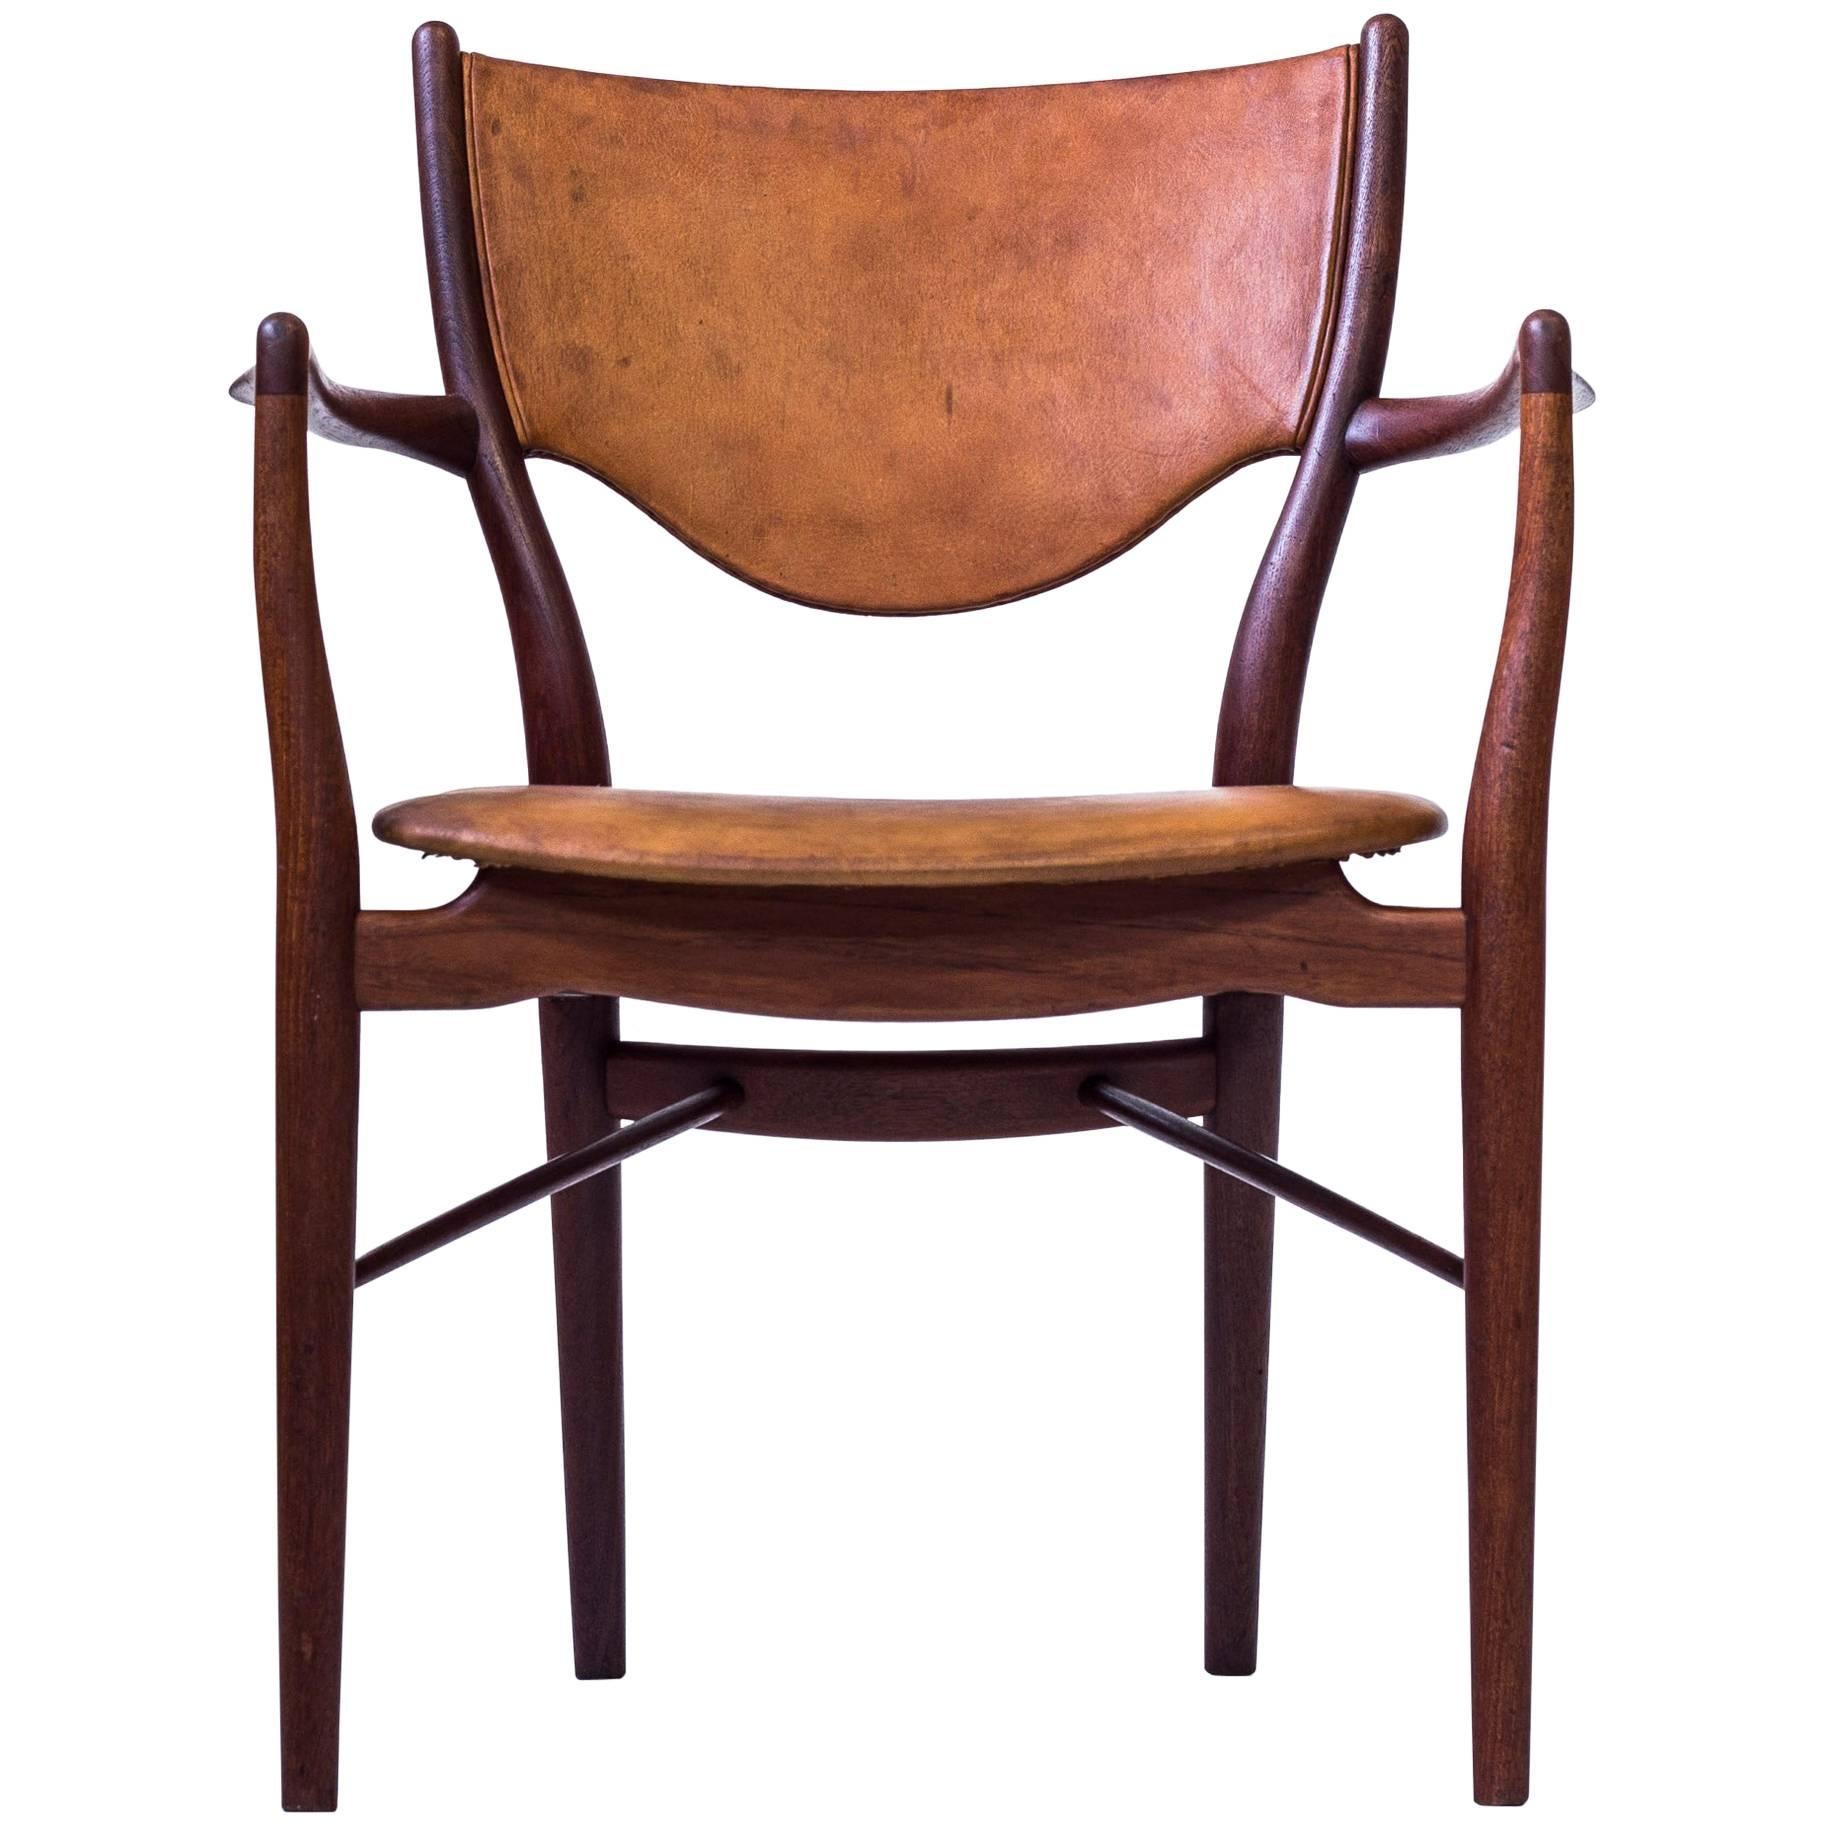 BO-72 arm chair by Finn Juhl, Denmark, 1950s